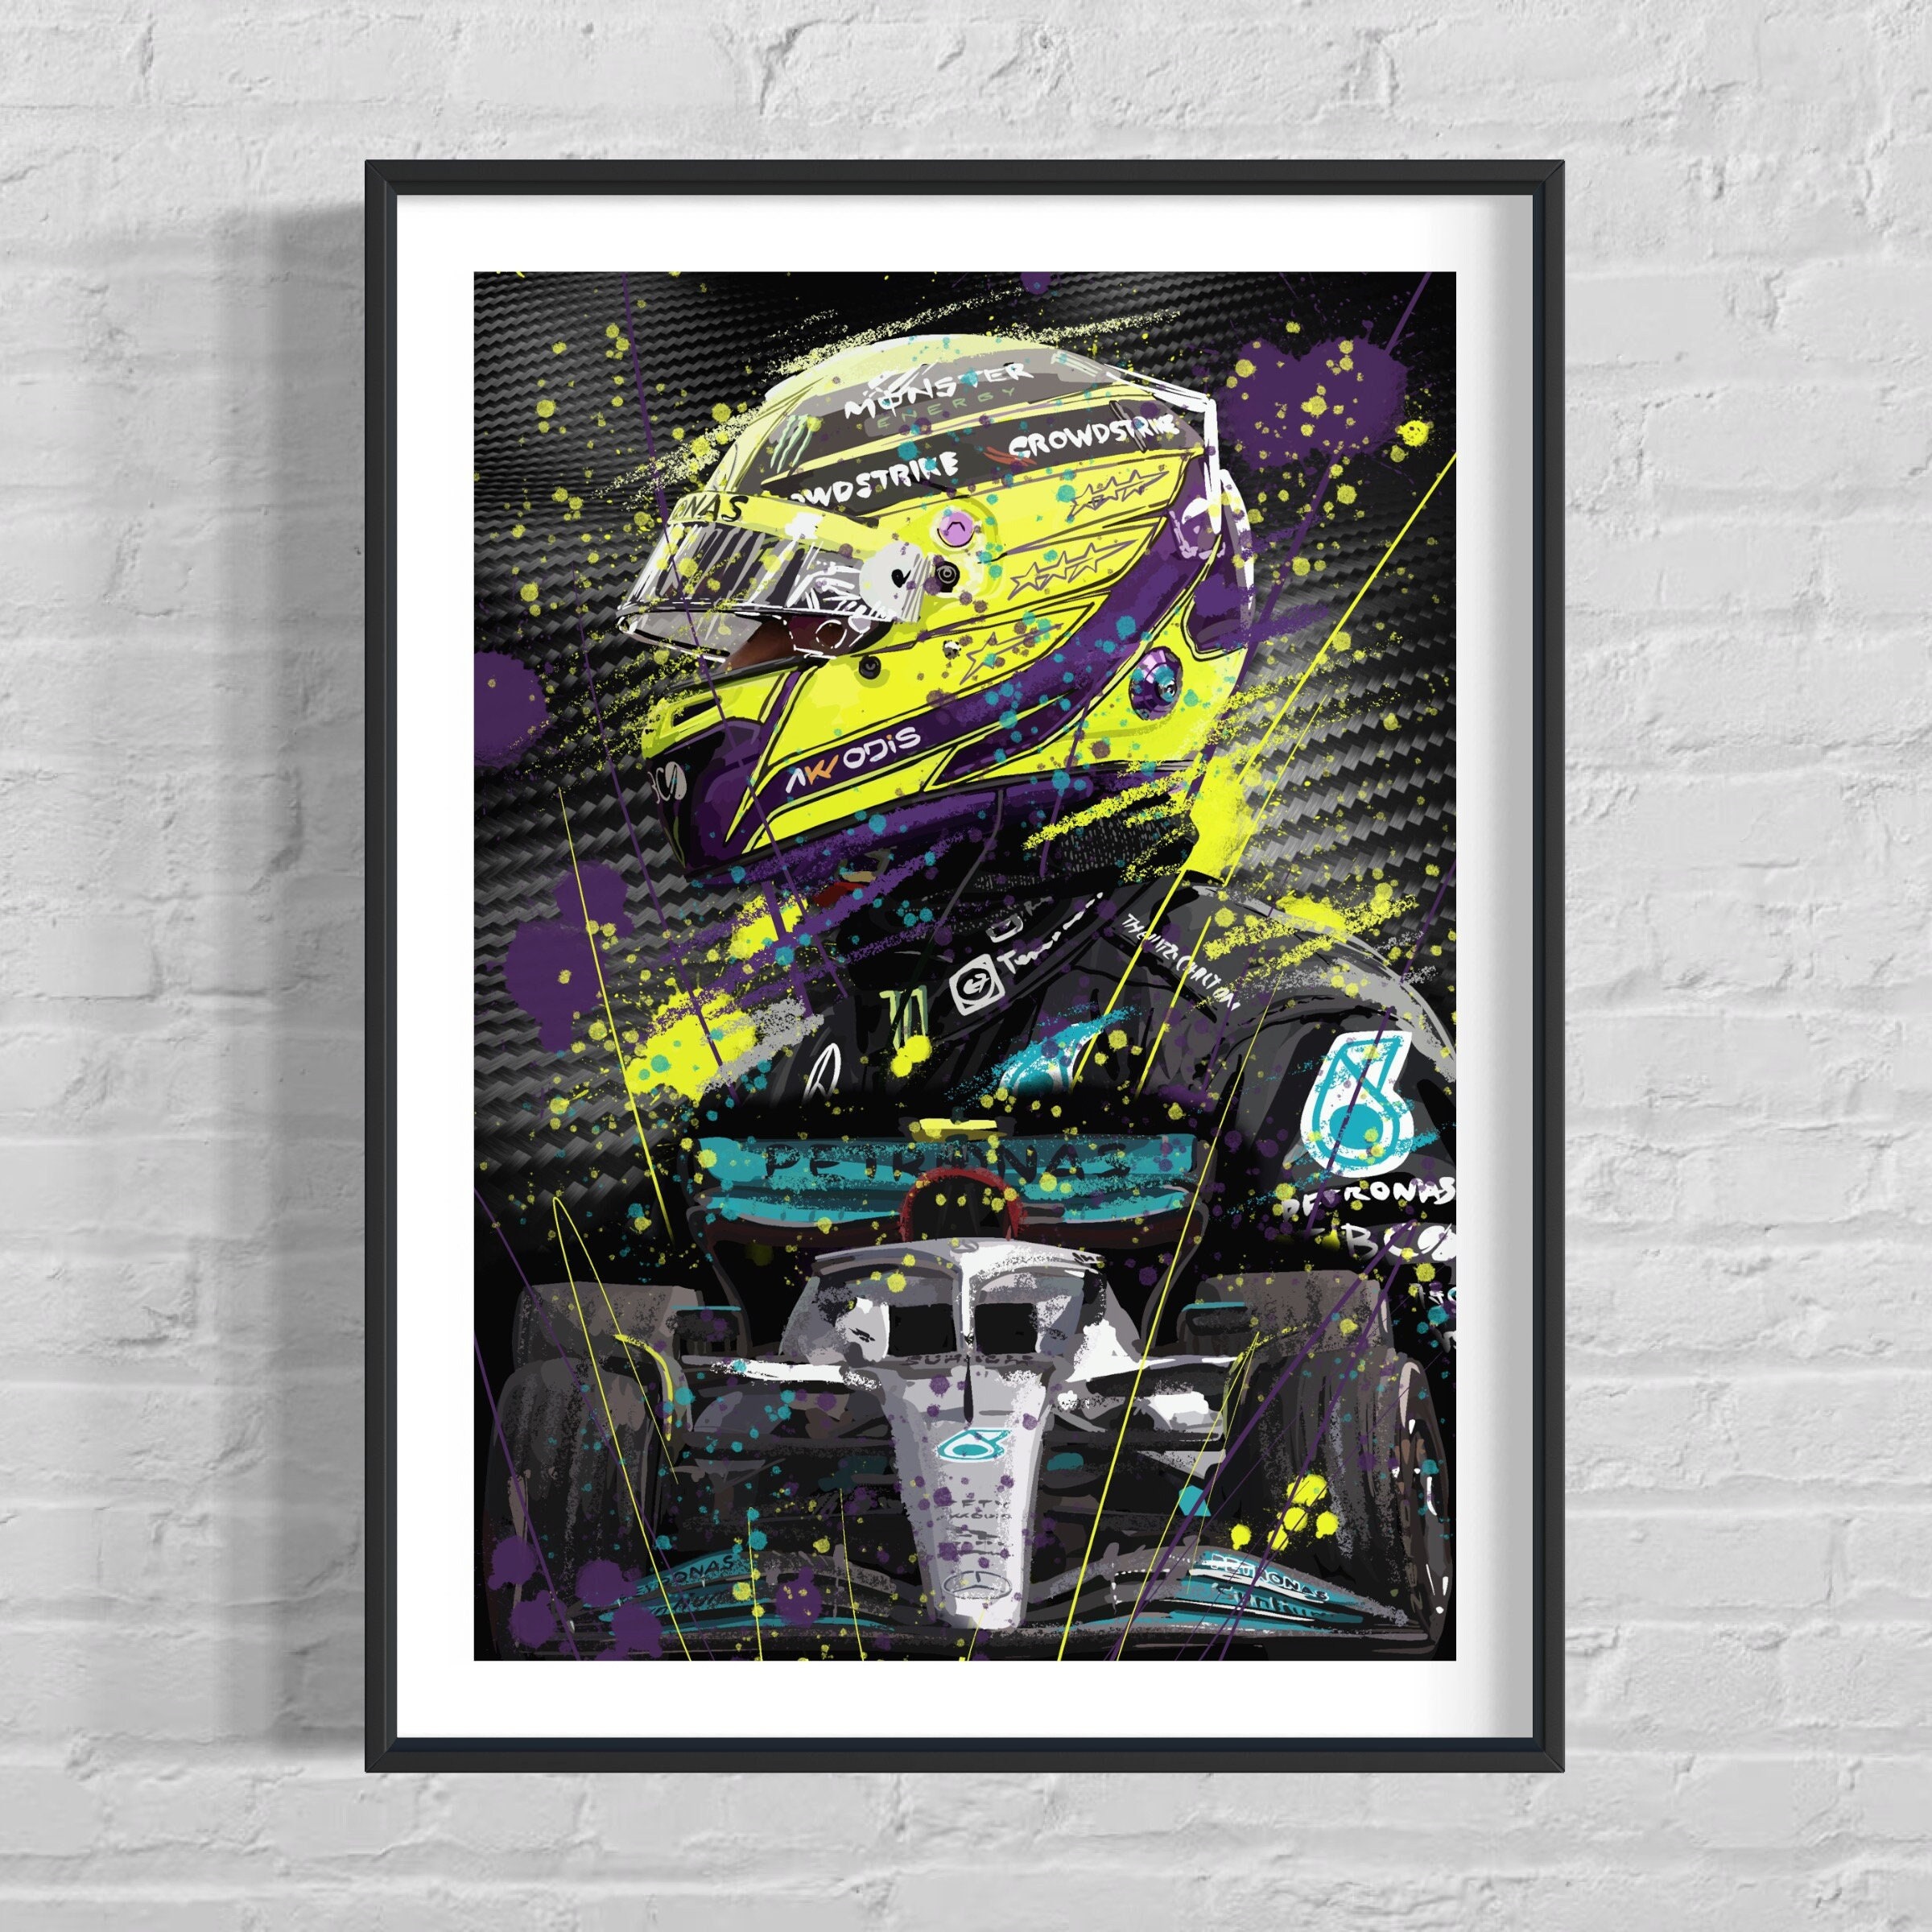 Lewis Hamilton posters & prints by Noto Diharjo Semi